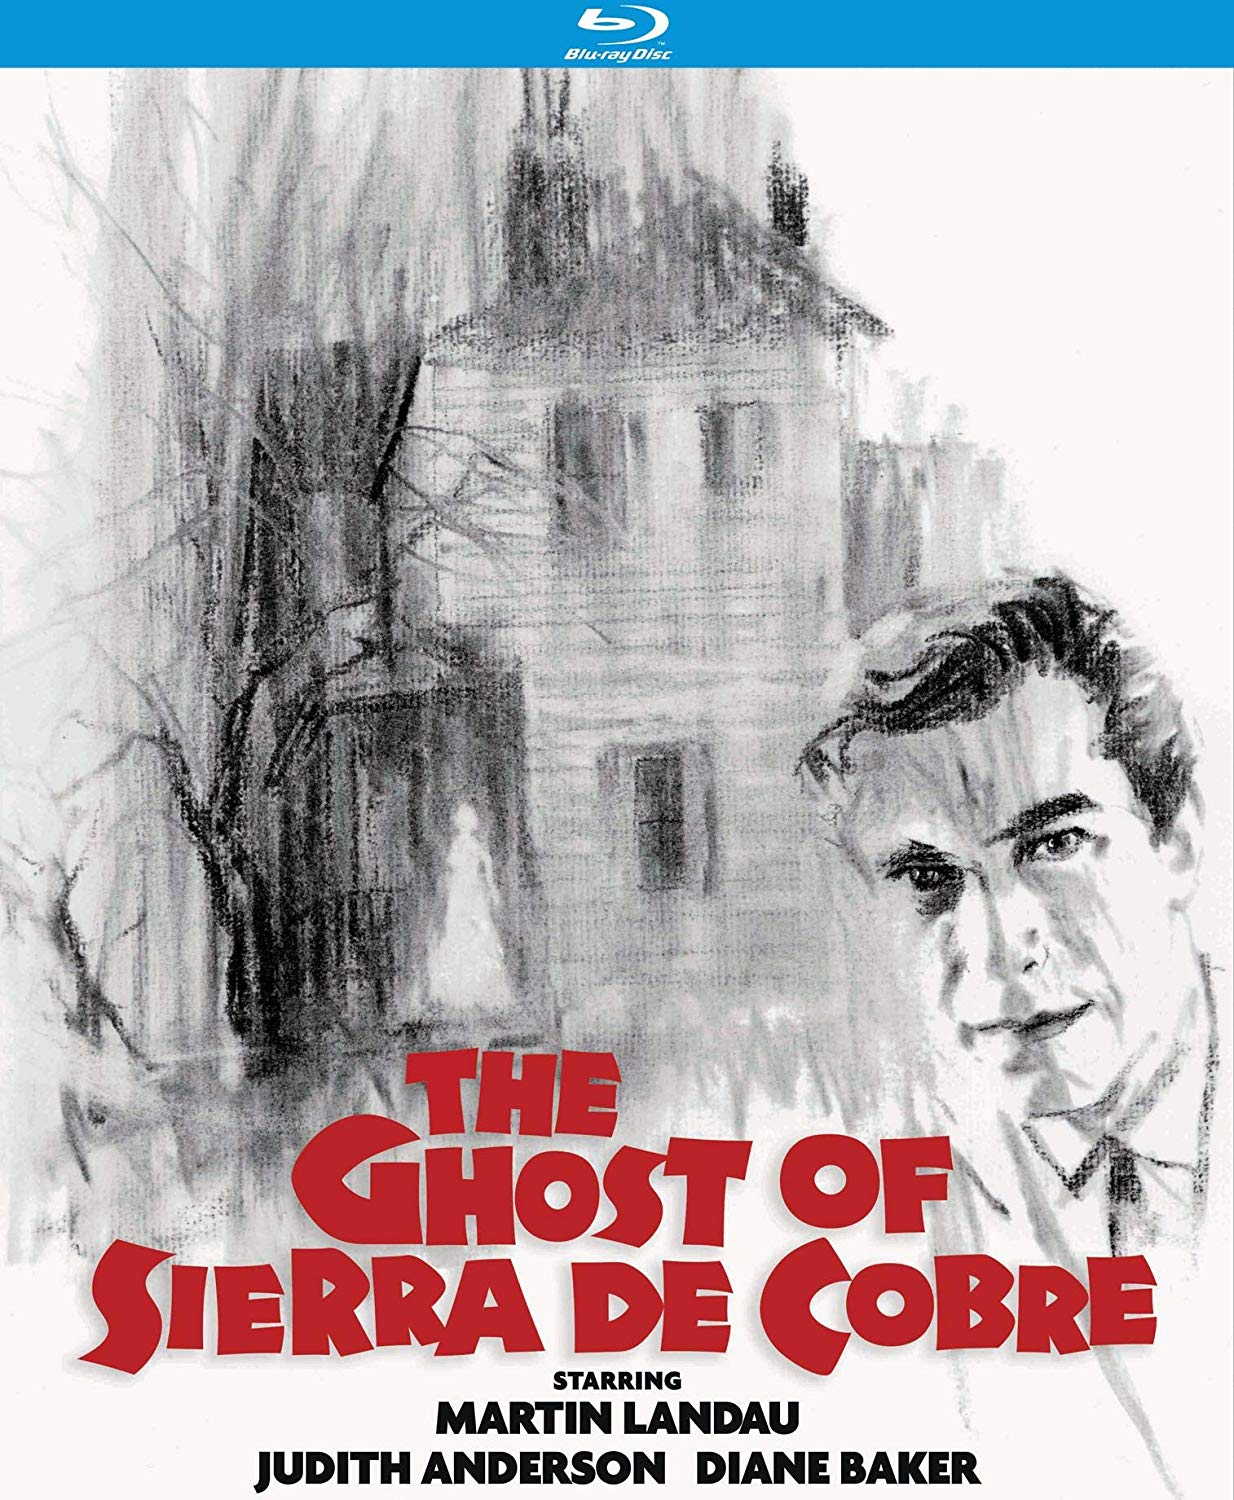 The Ghost of Sierra de Cobre poster